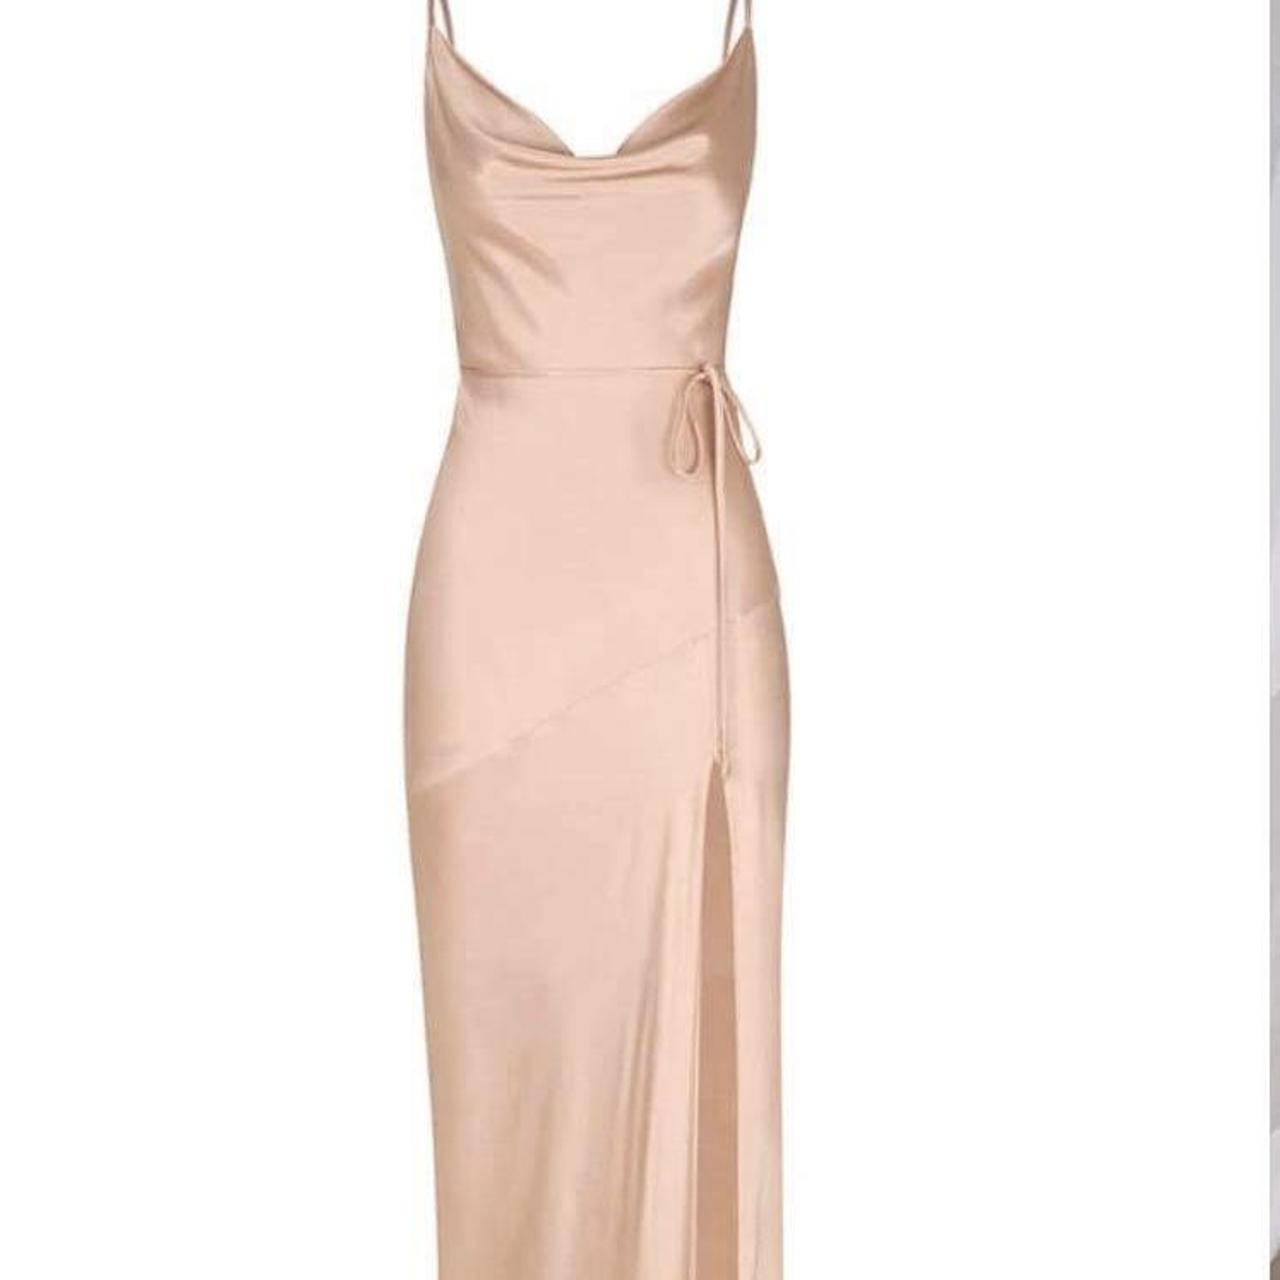 Shona Joy Women's Tan and Pink Dress | Depop